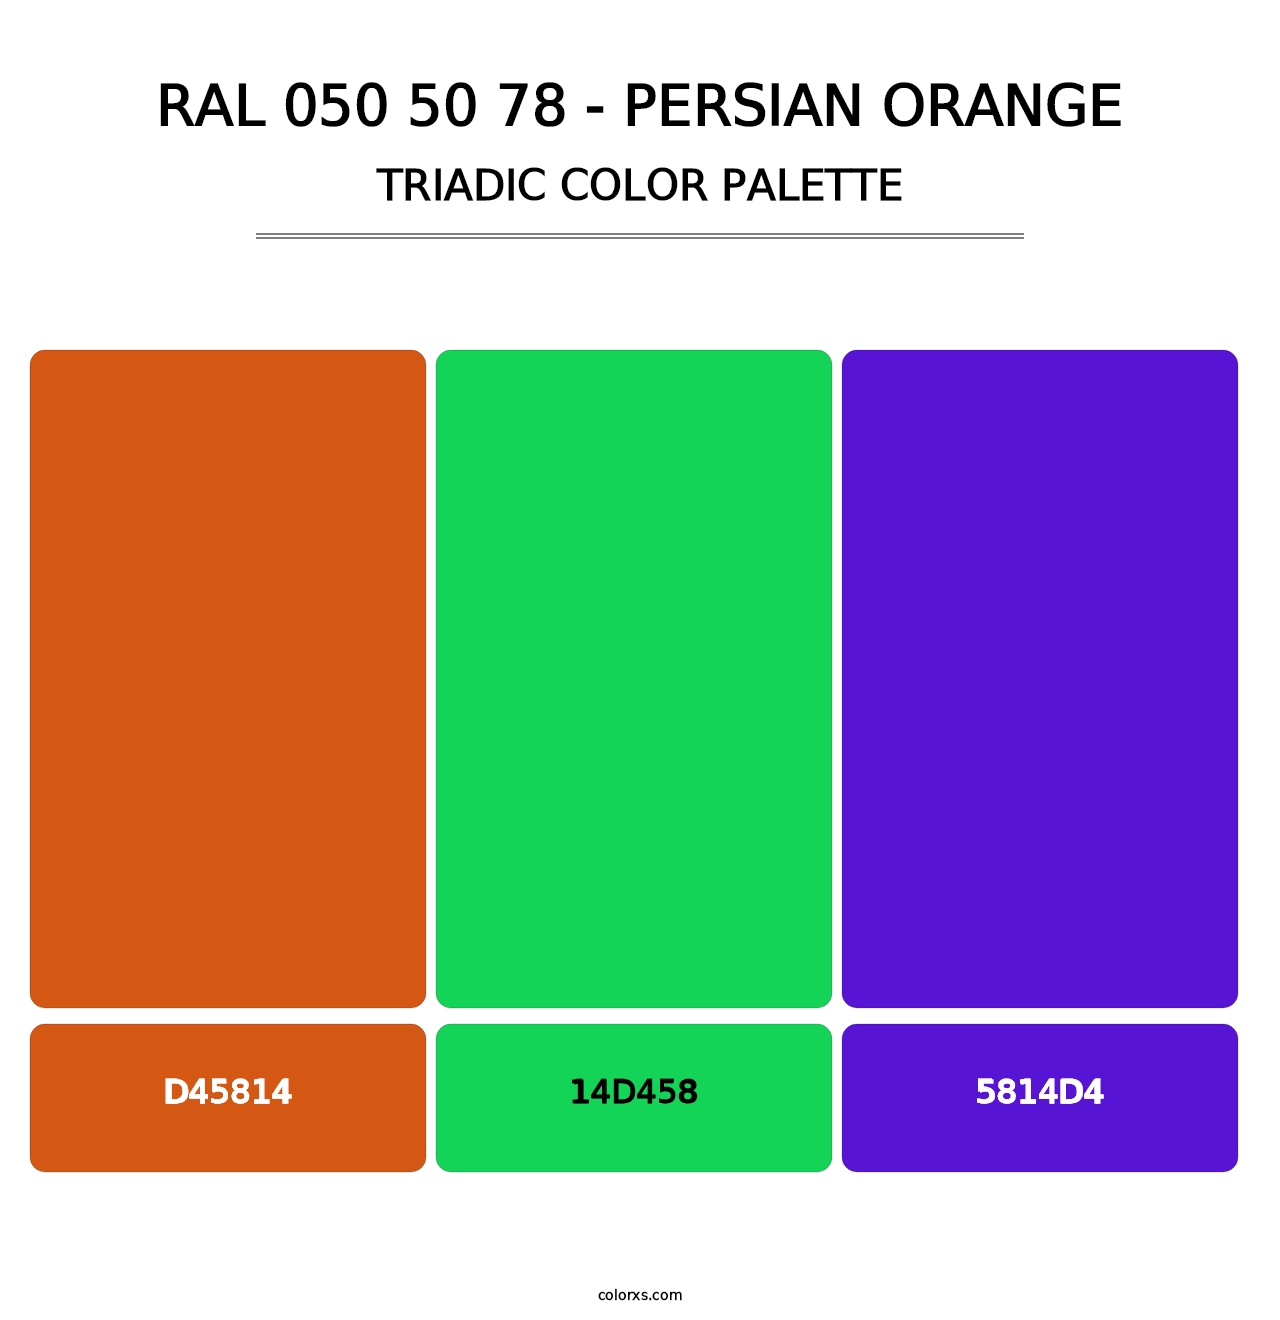 RAL 050 50 78 - Persian Orange - Triadic Color Palette